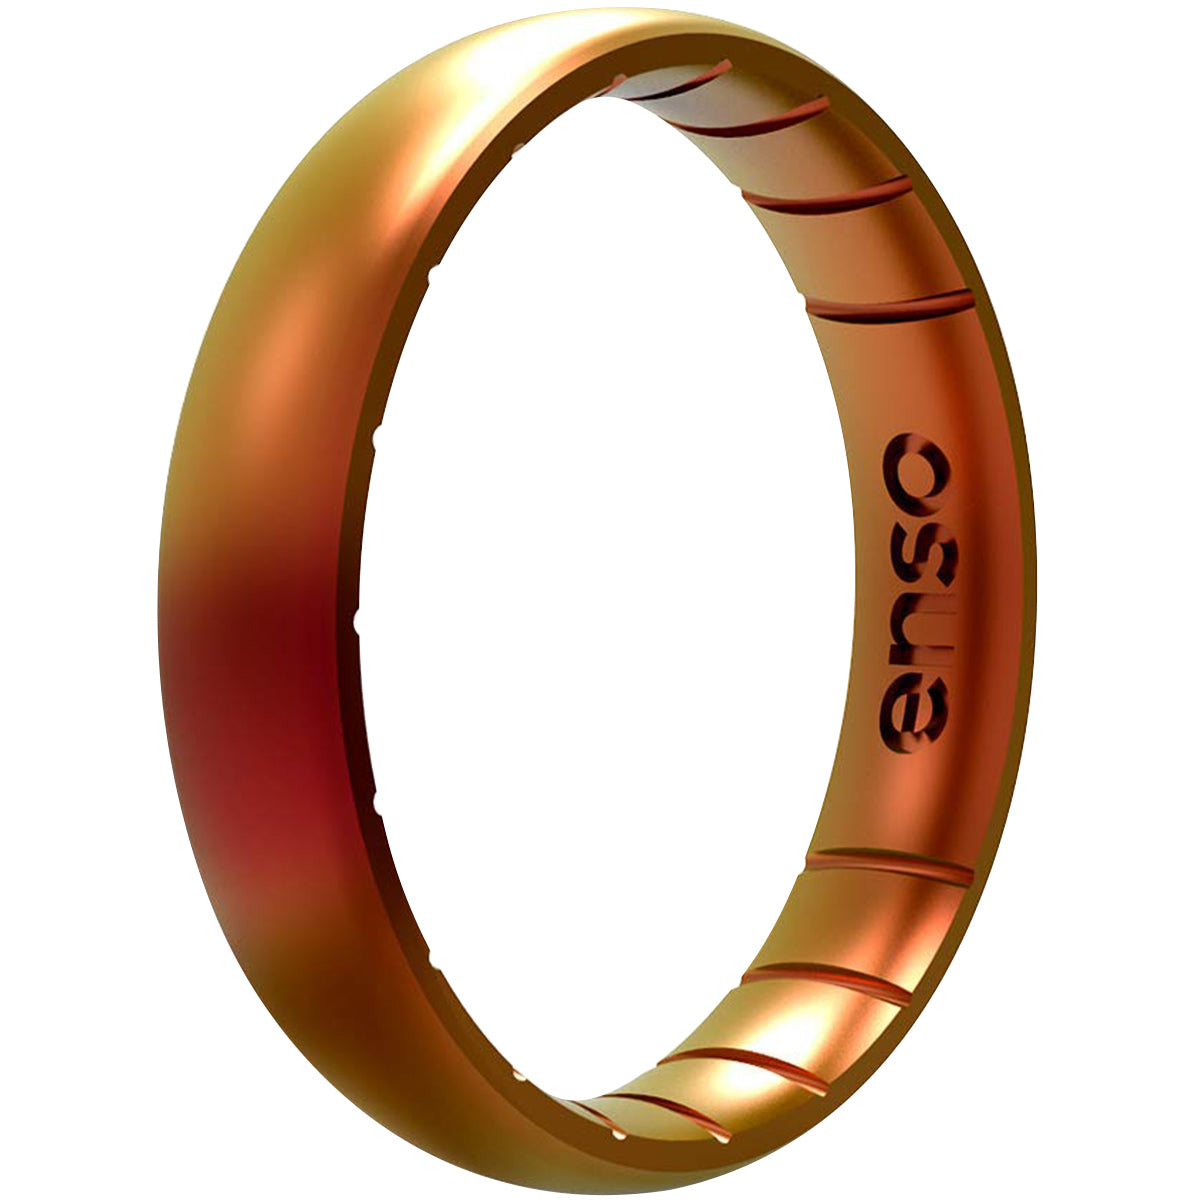 Enso Rings Thin Legends Series Silicone Ring - Poseidon Enso Rings